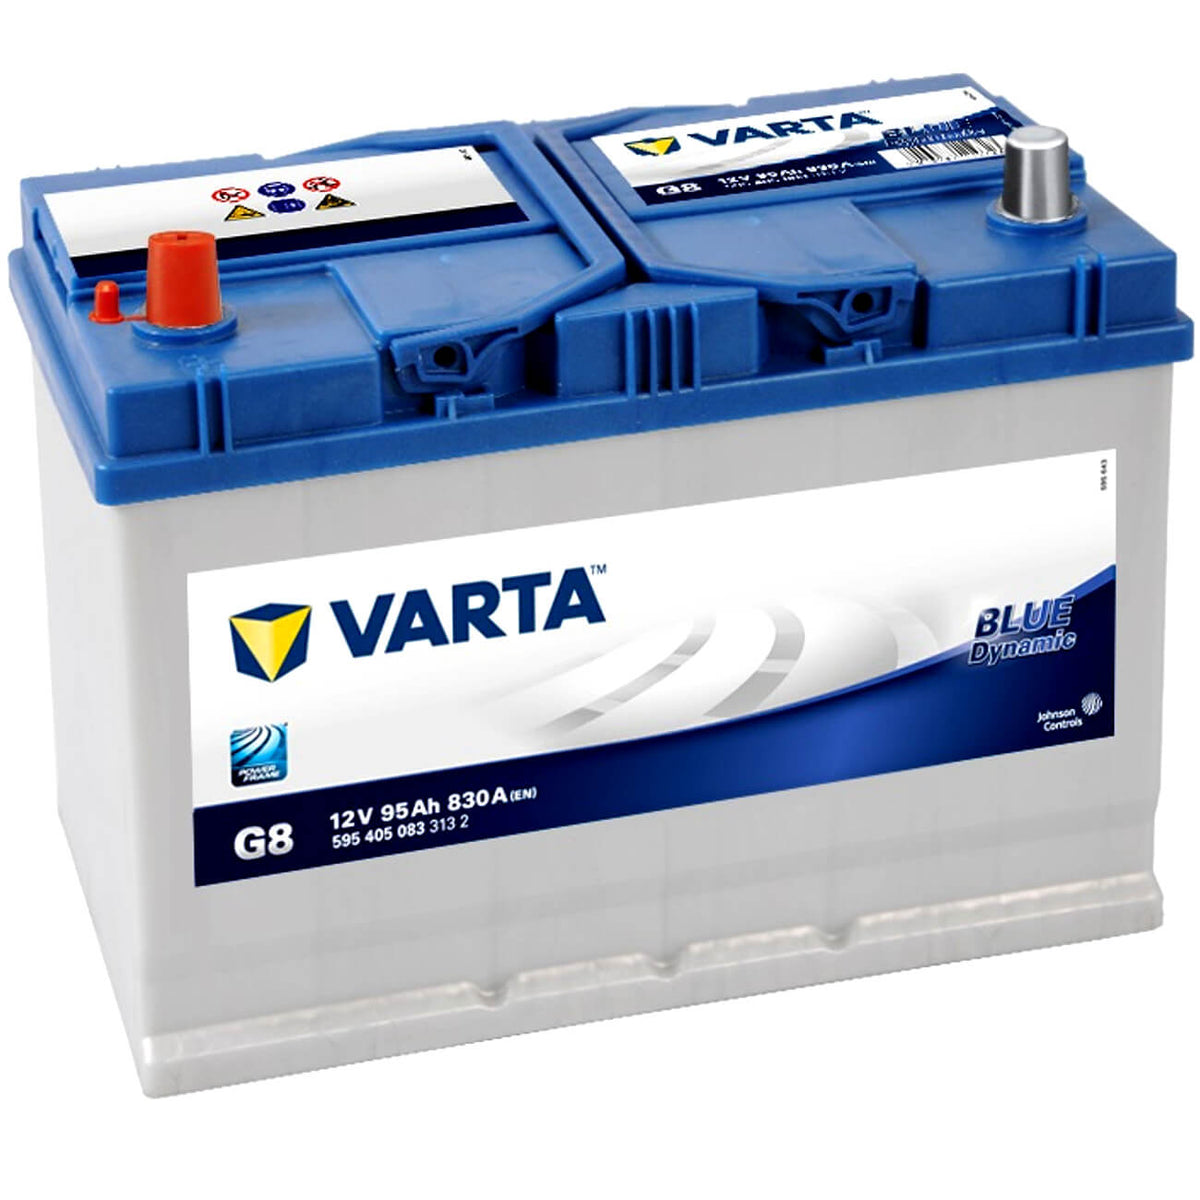 Varta G8 Blue Dynamic 12V 95Ah 830A/EN